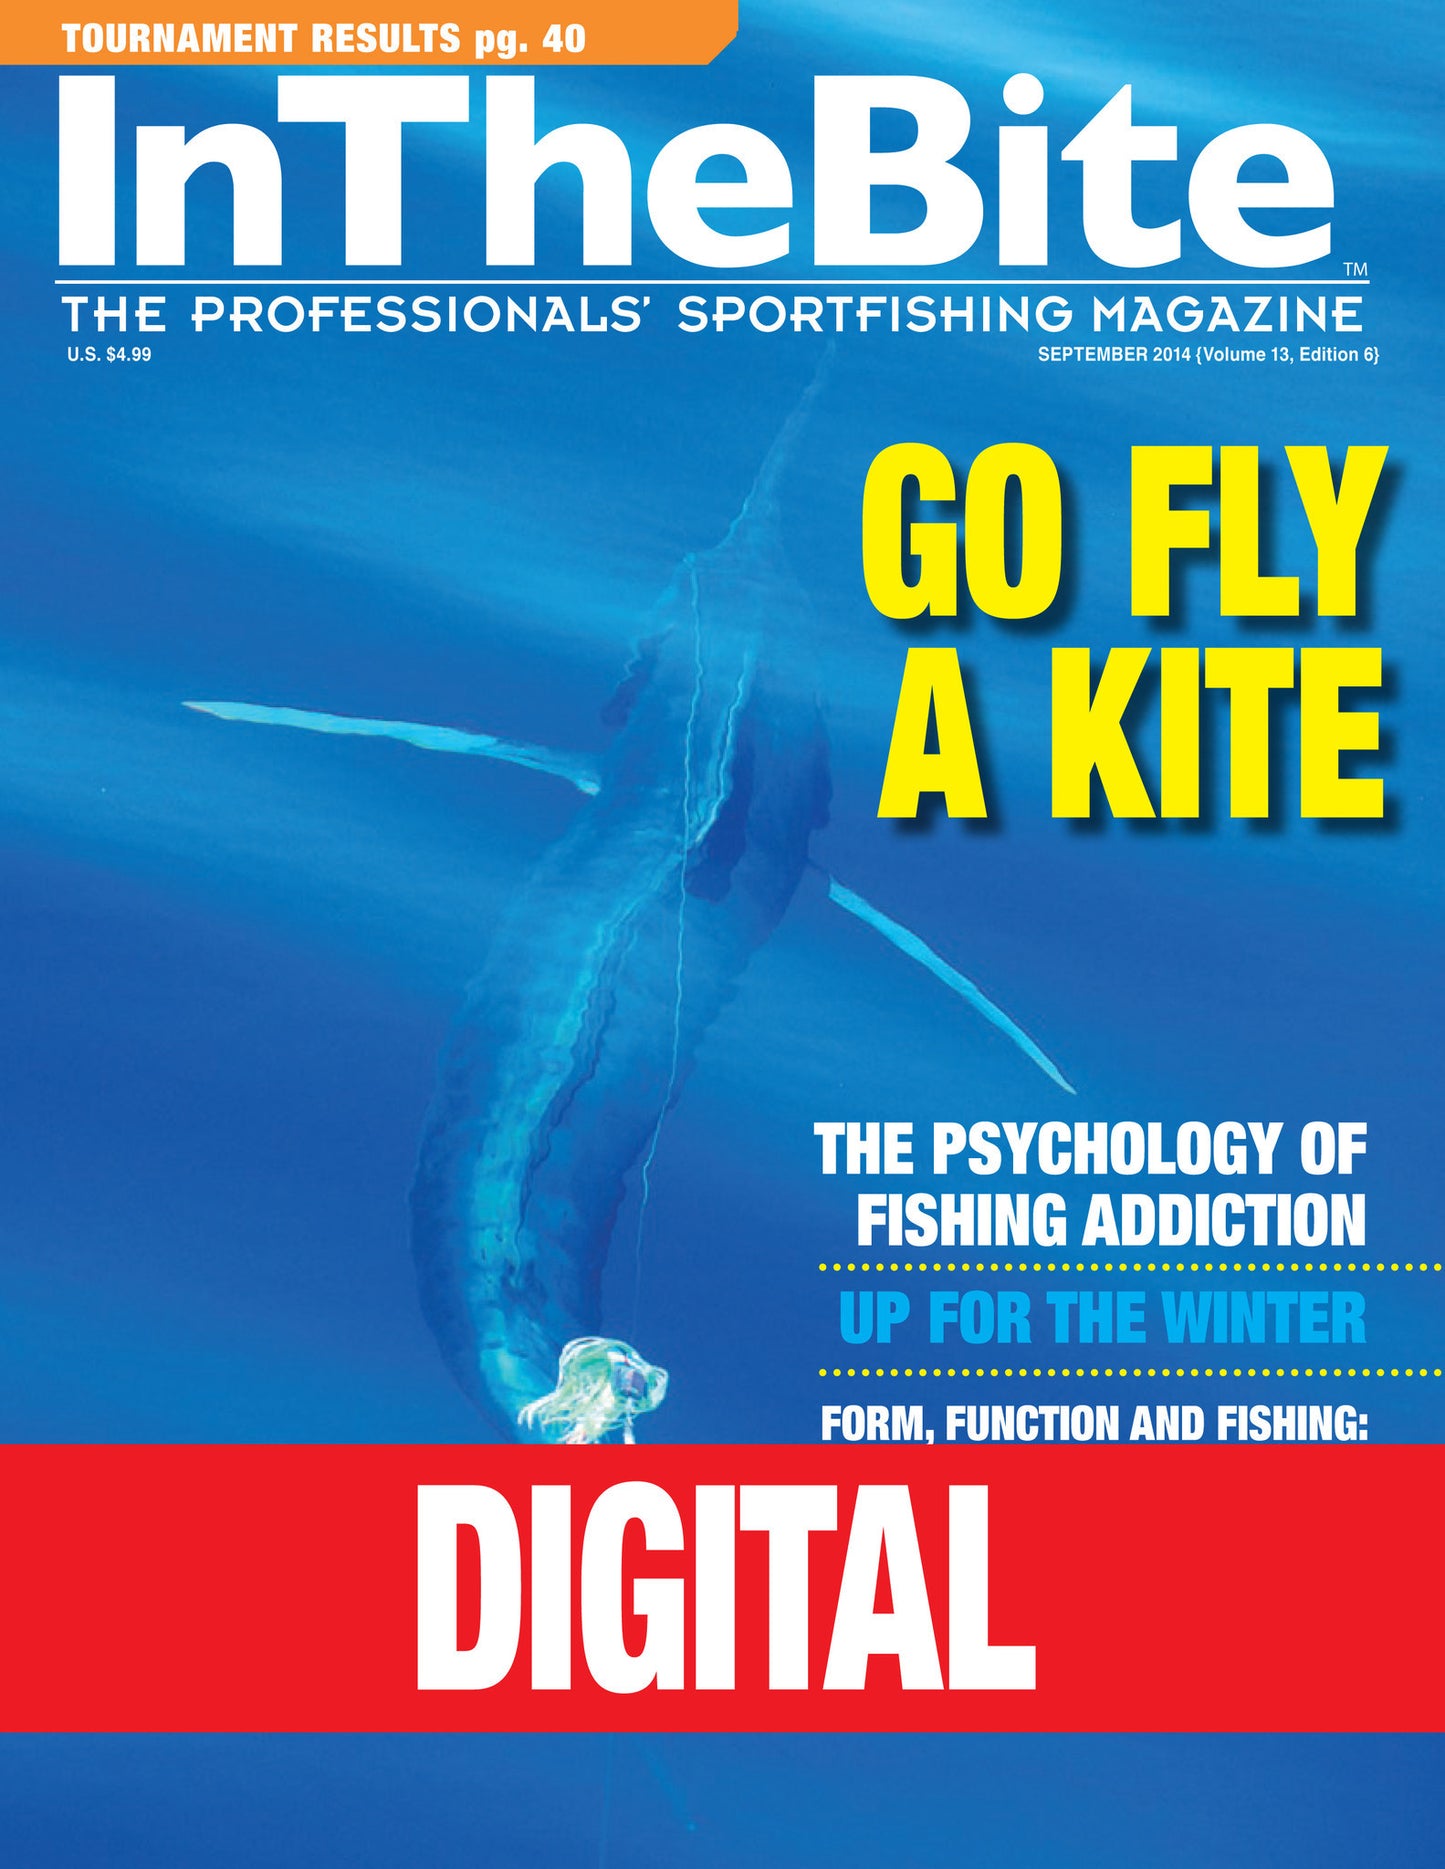 InTheBite Volume 13 Edition 07 - October/November 2014 - Digital Edition